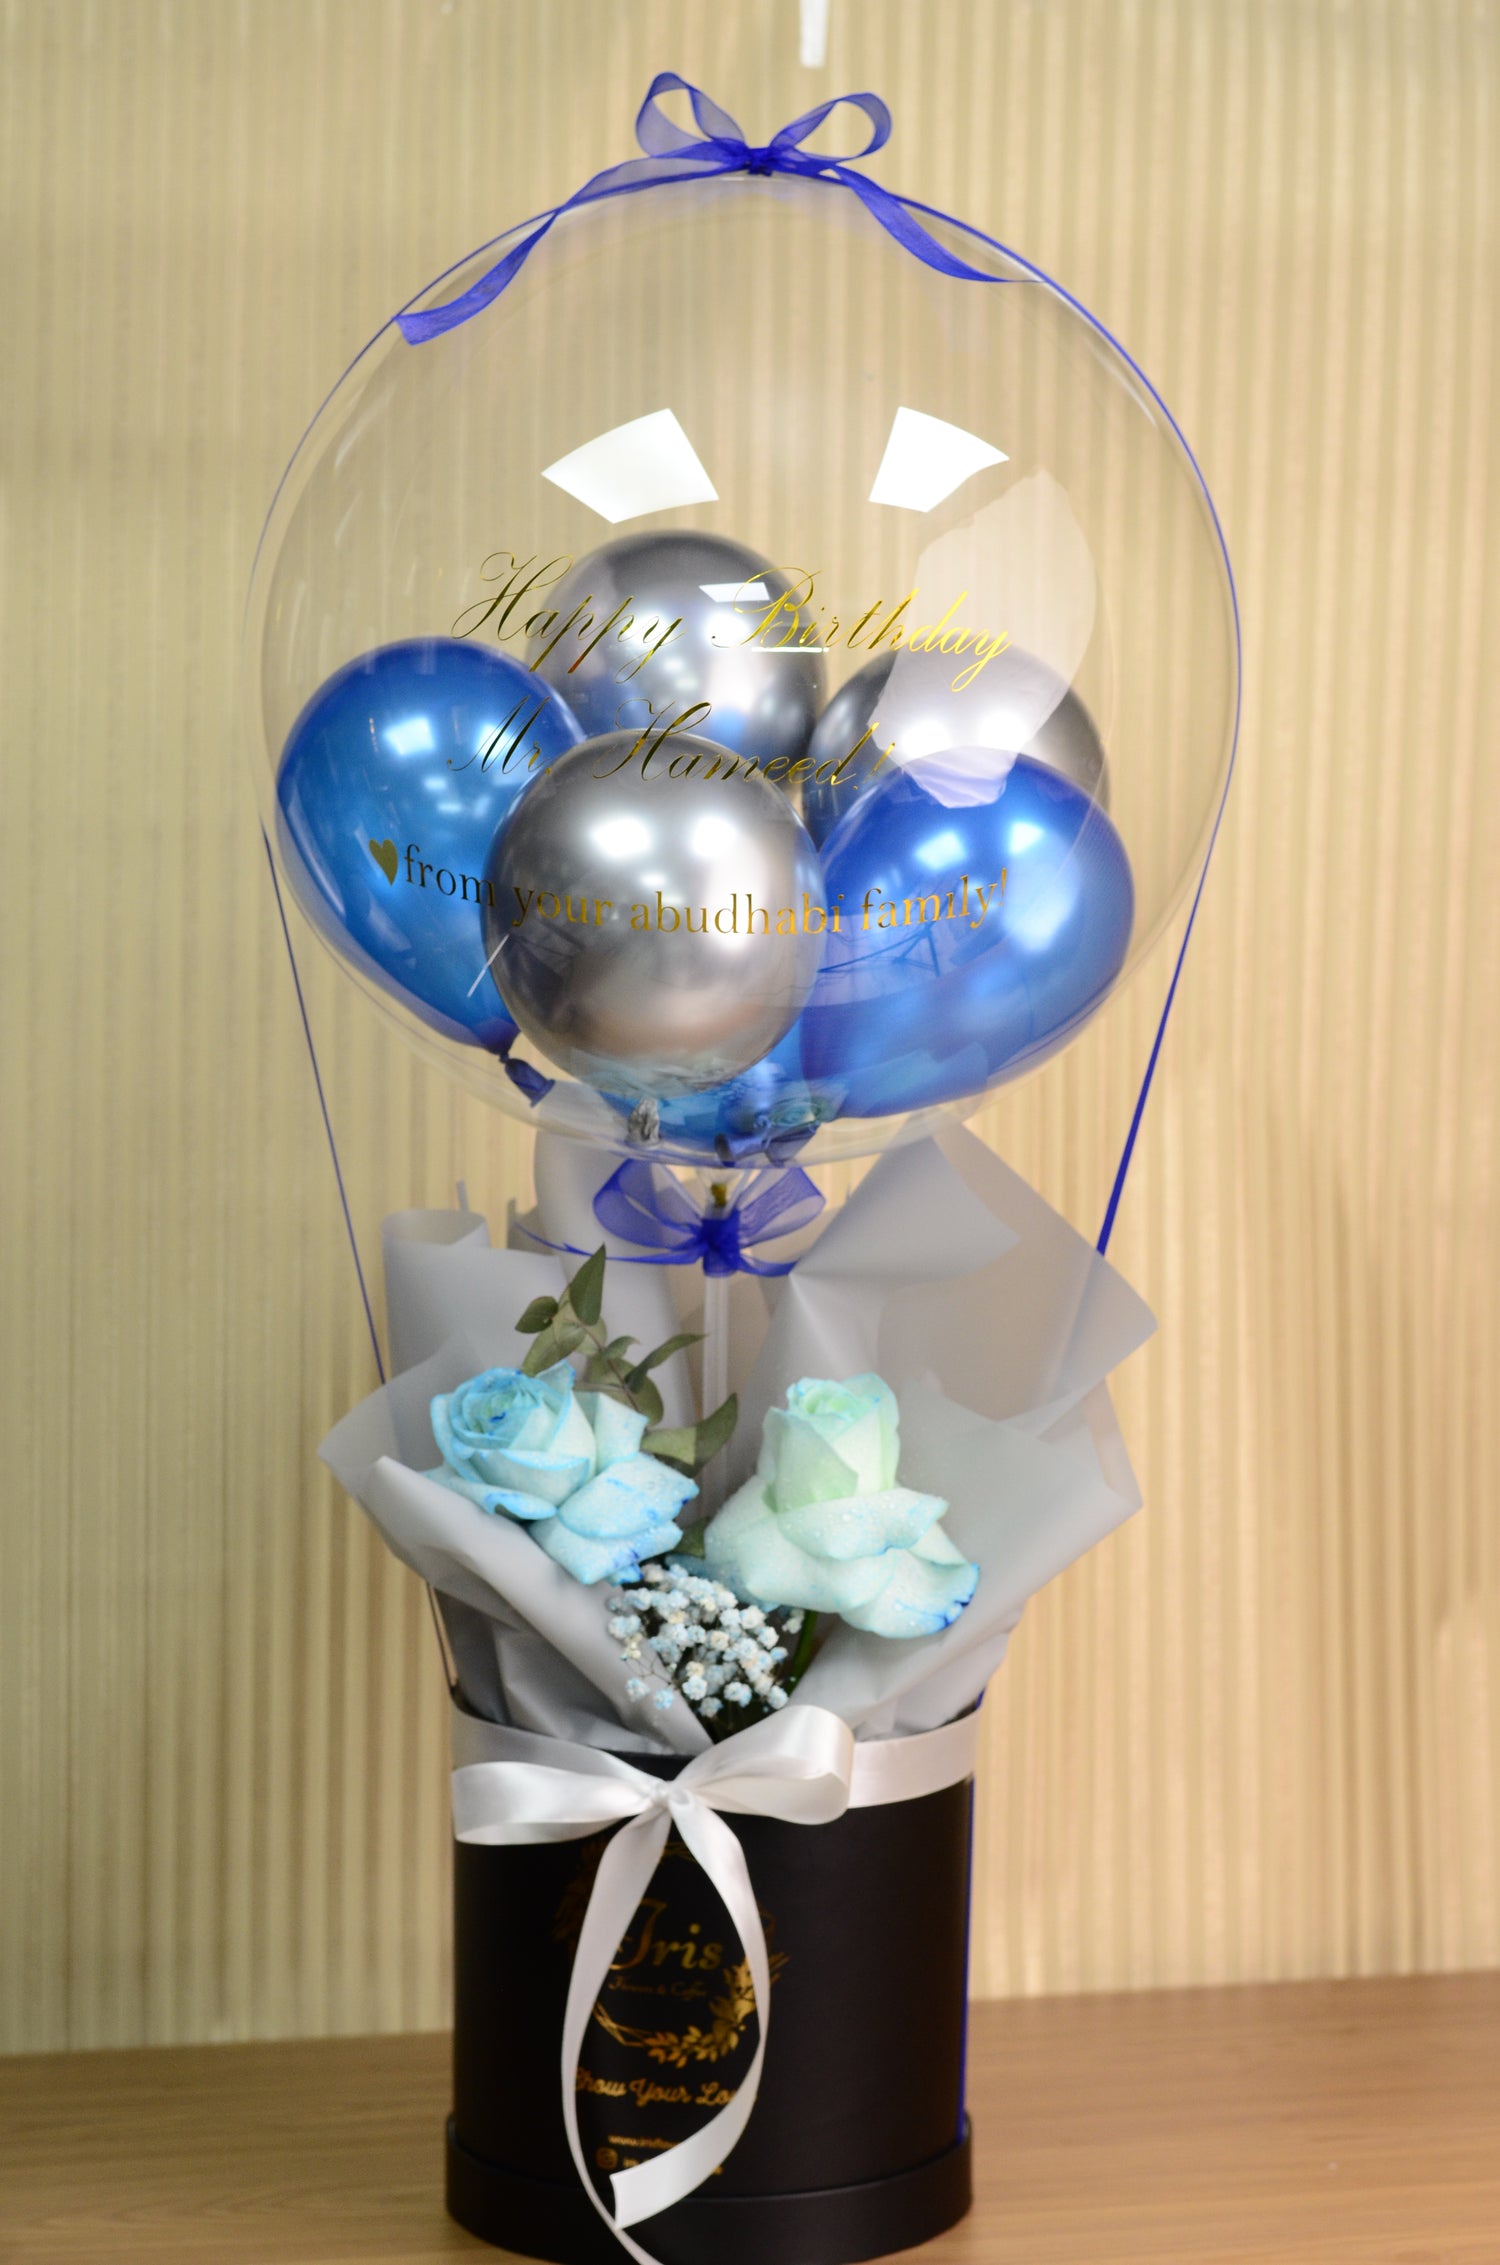 Send Iris Amazing Blue Rose with Balloons in Box - Iris Flowers